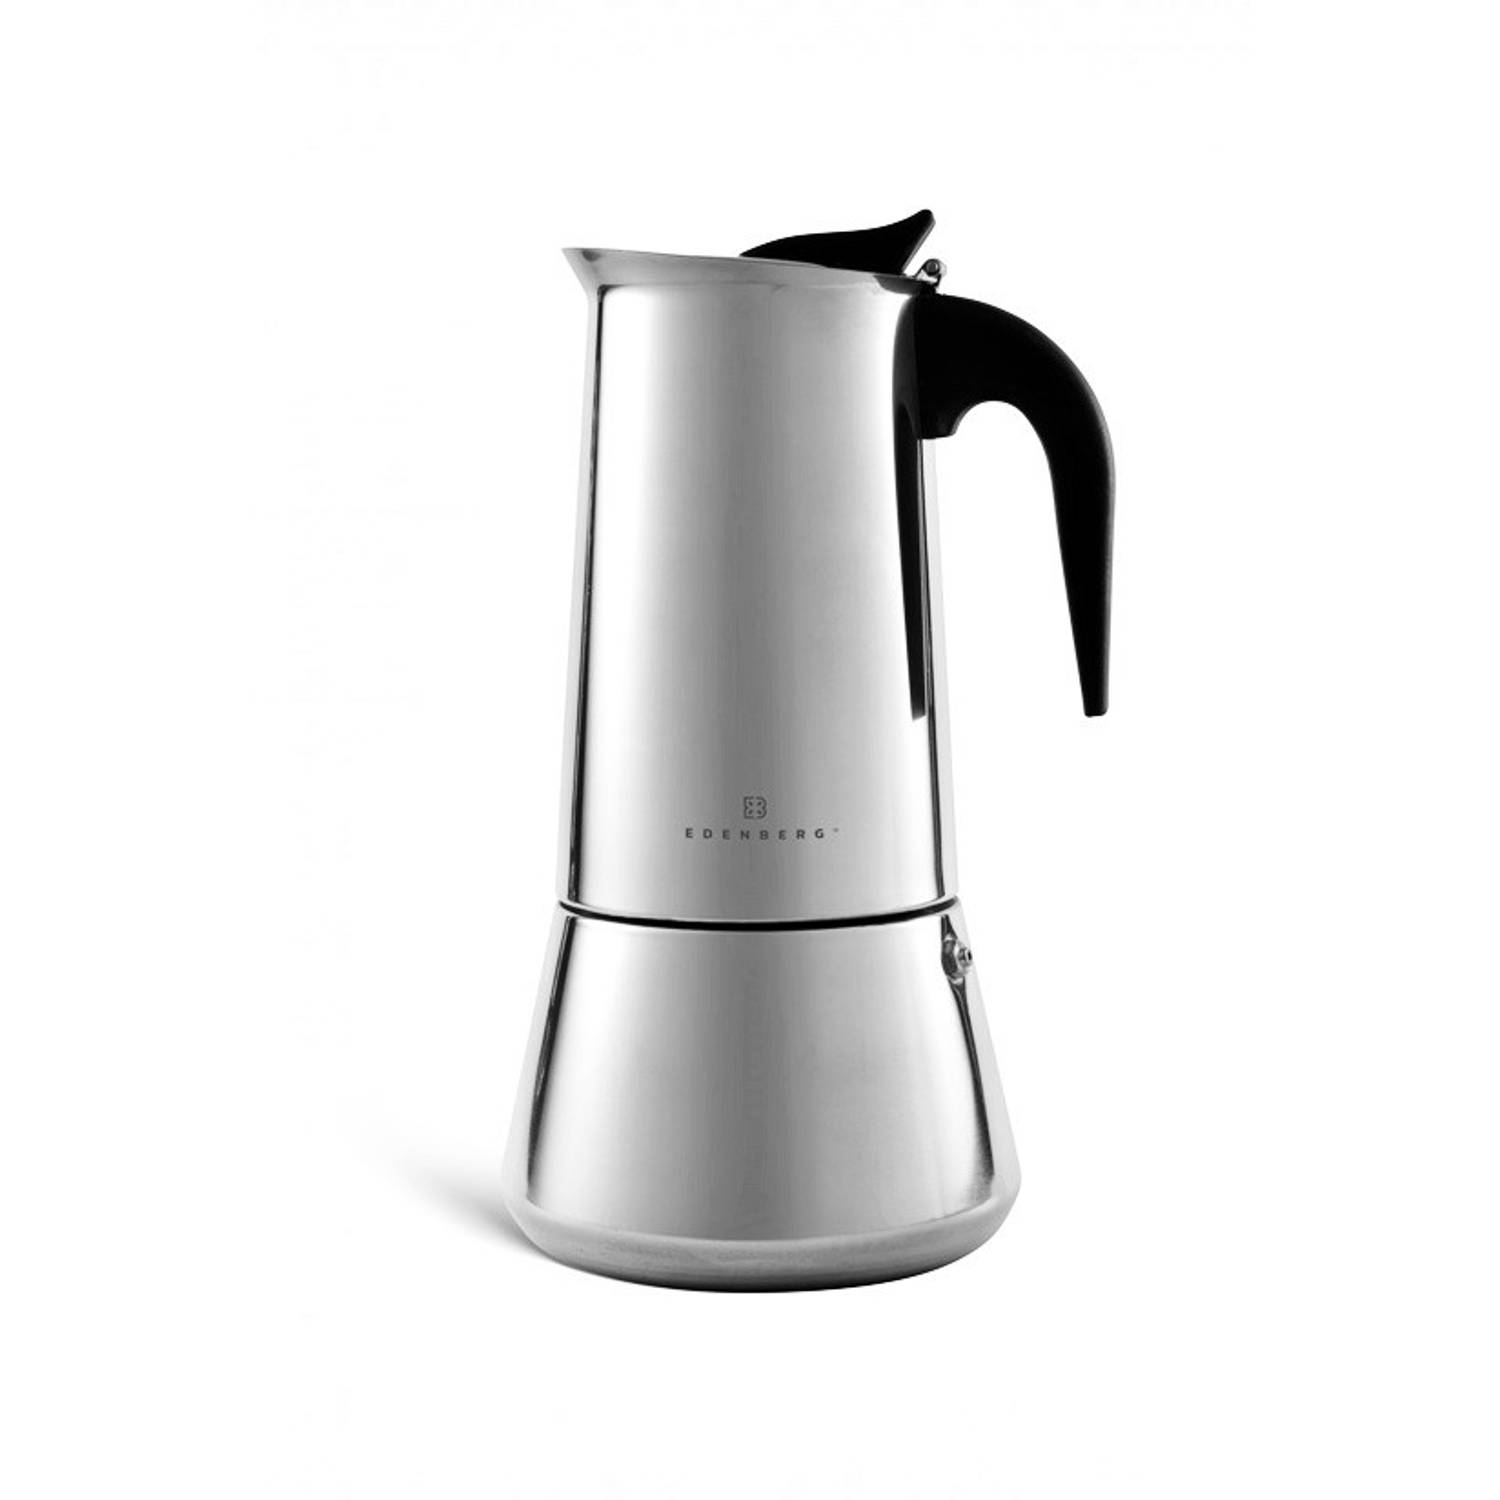 Edënbërg Classic Line Percolator Koffiemaker 12 Kops Espresso Maker 500 Ml